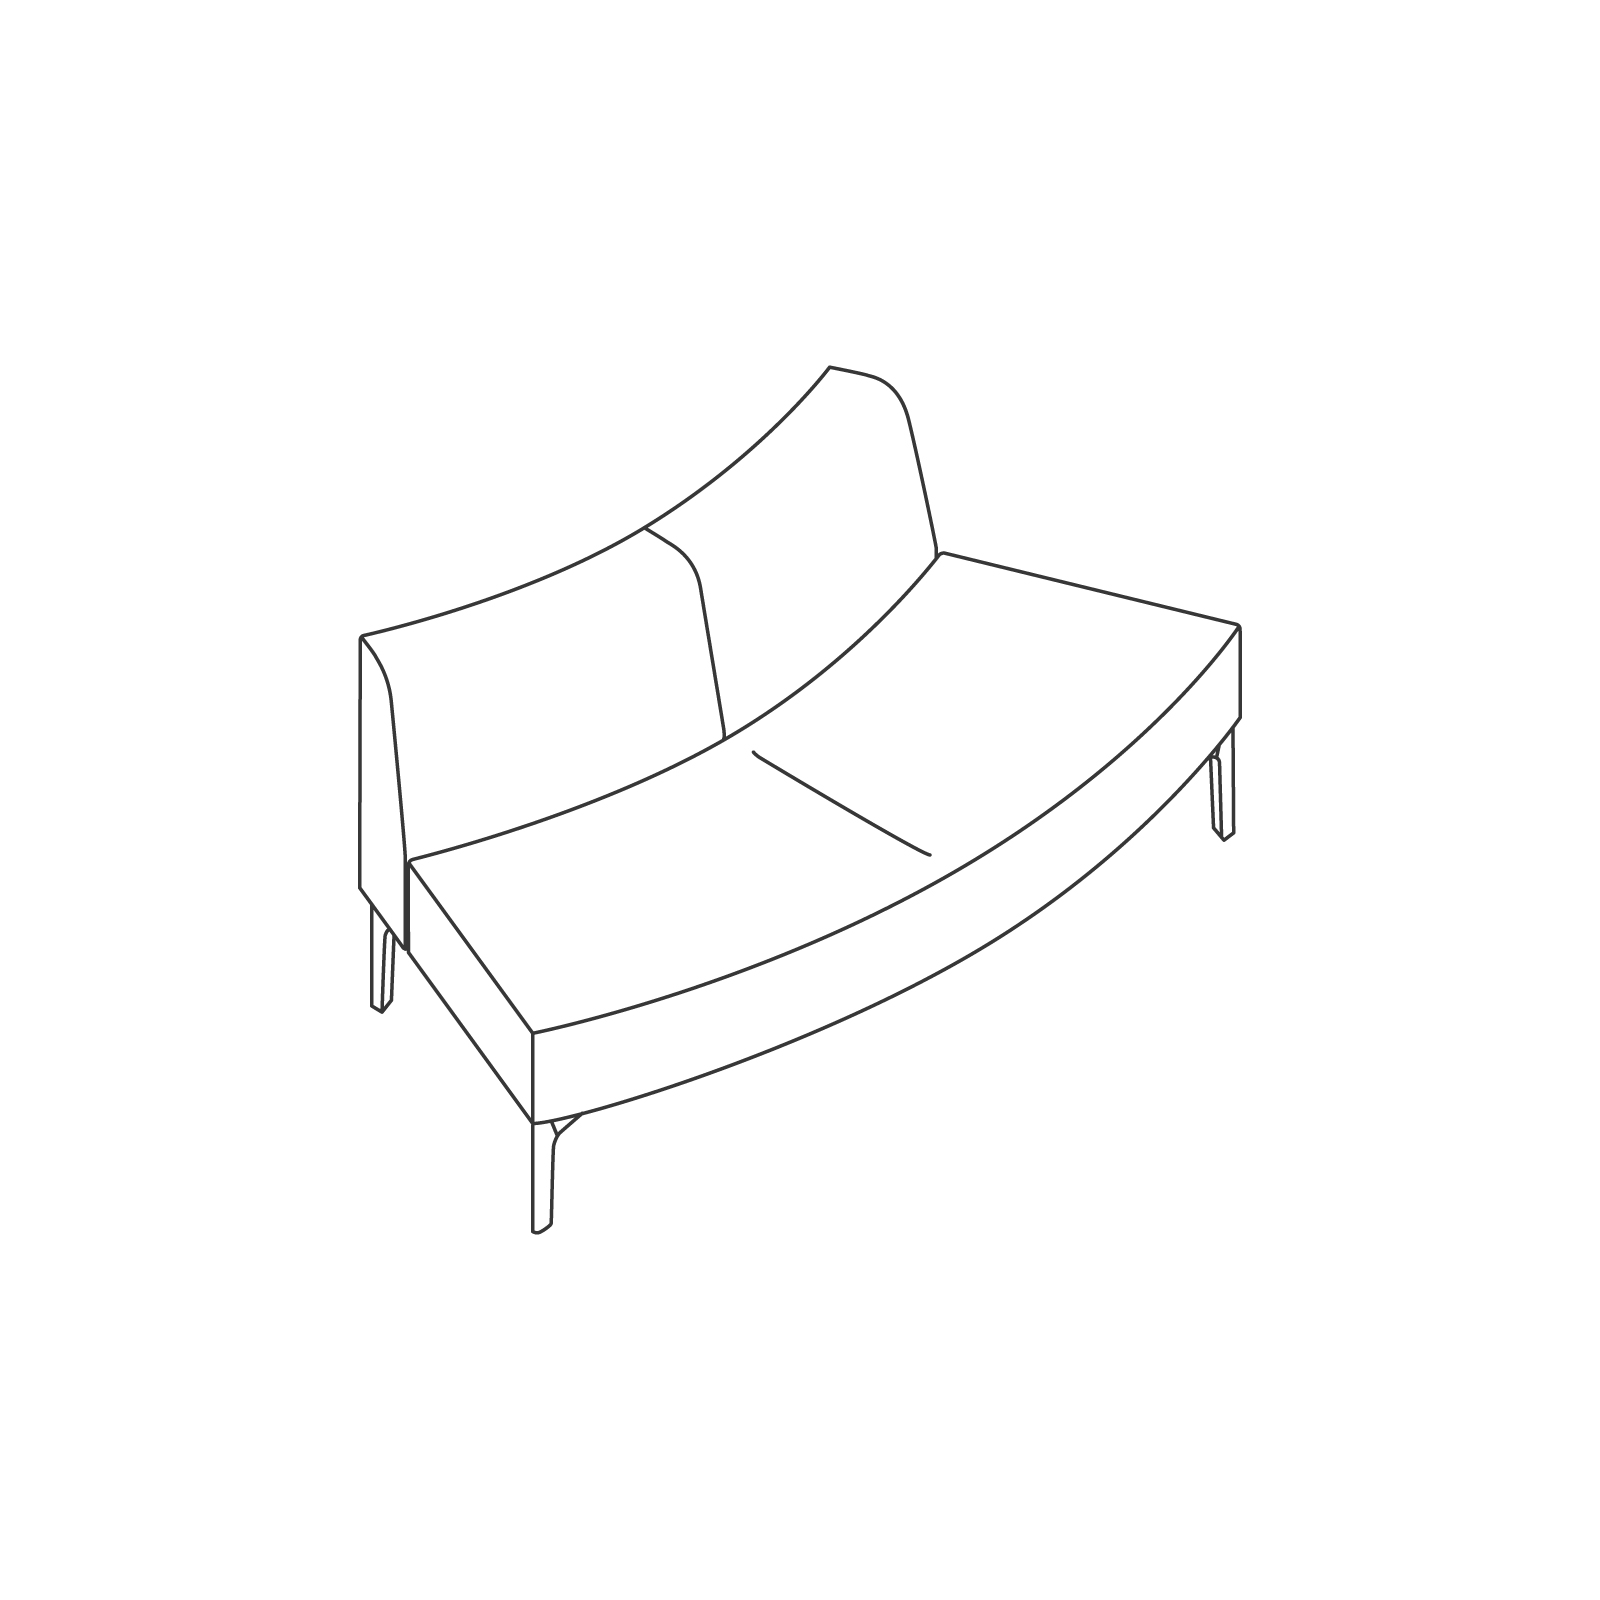 A line drawing - Symbol Modular Seating–45-Degree External Curve